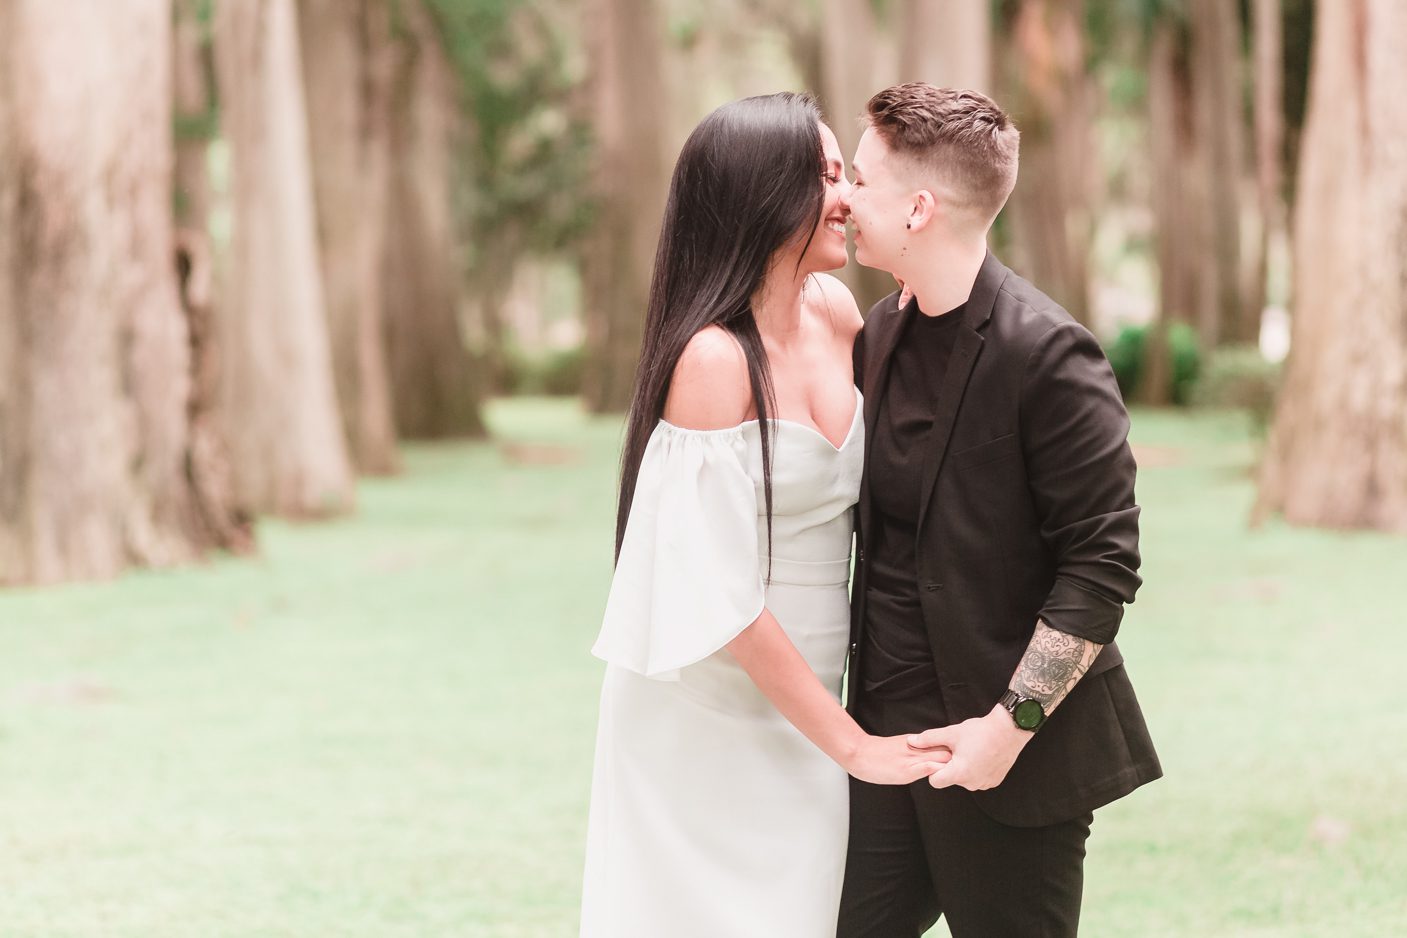 Gay wedding at kraft azalea gardens in Orlando featuring two brides